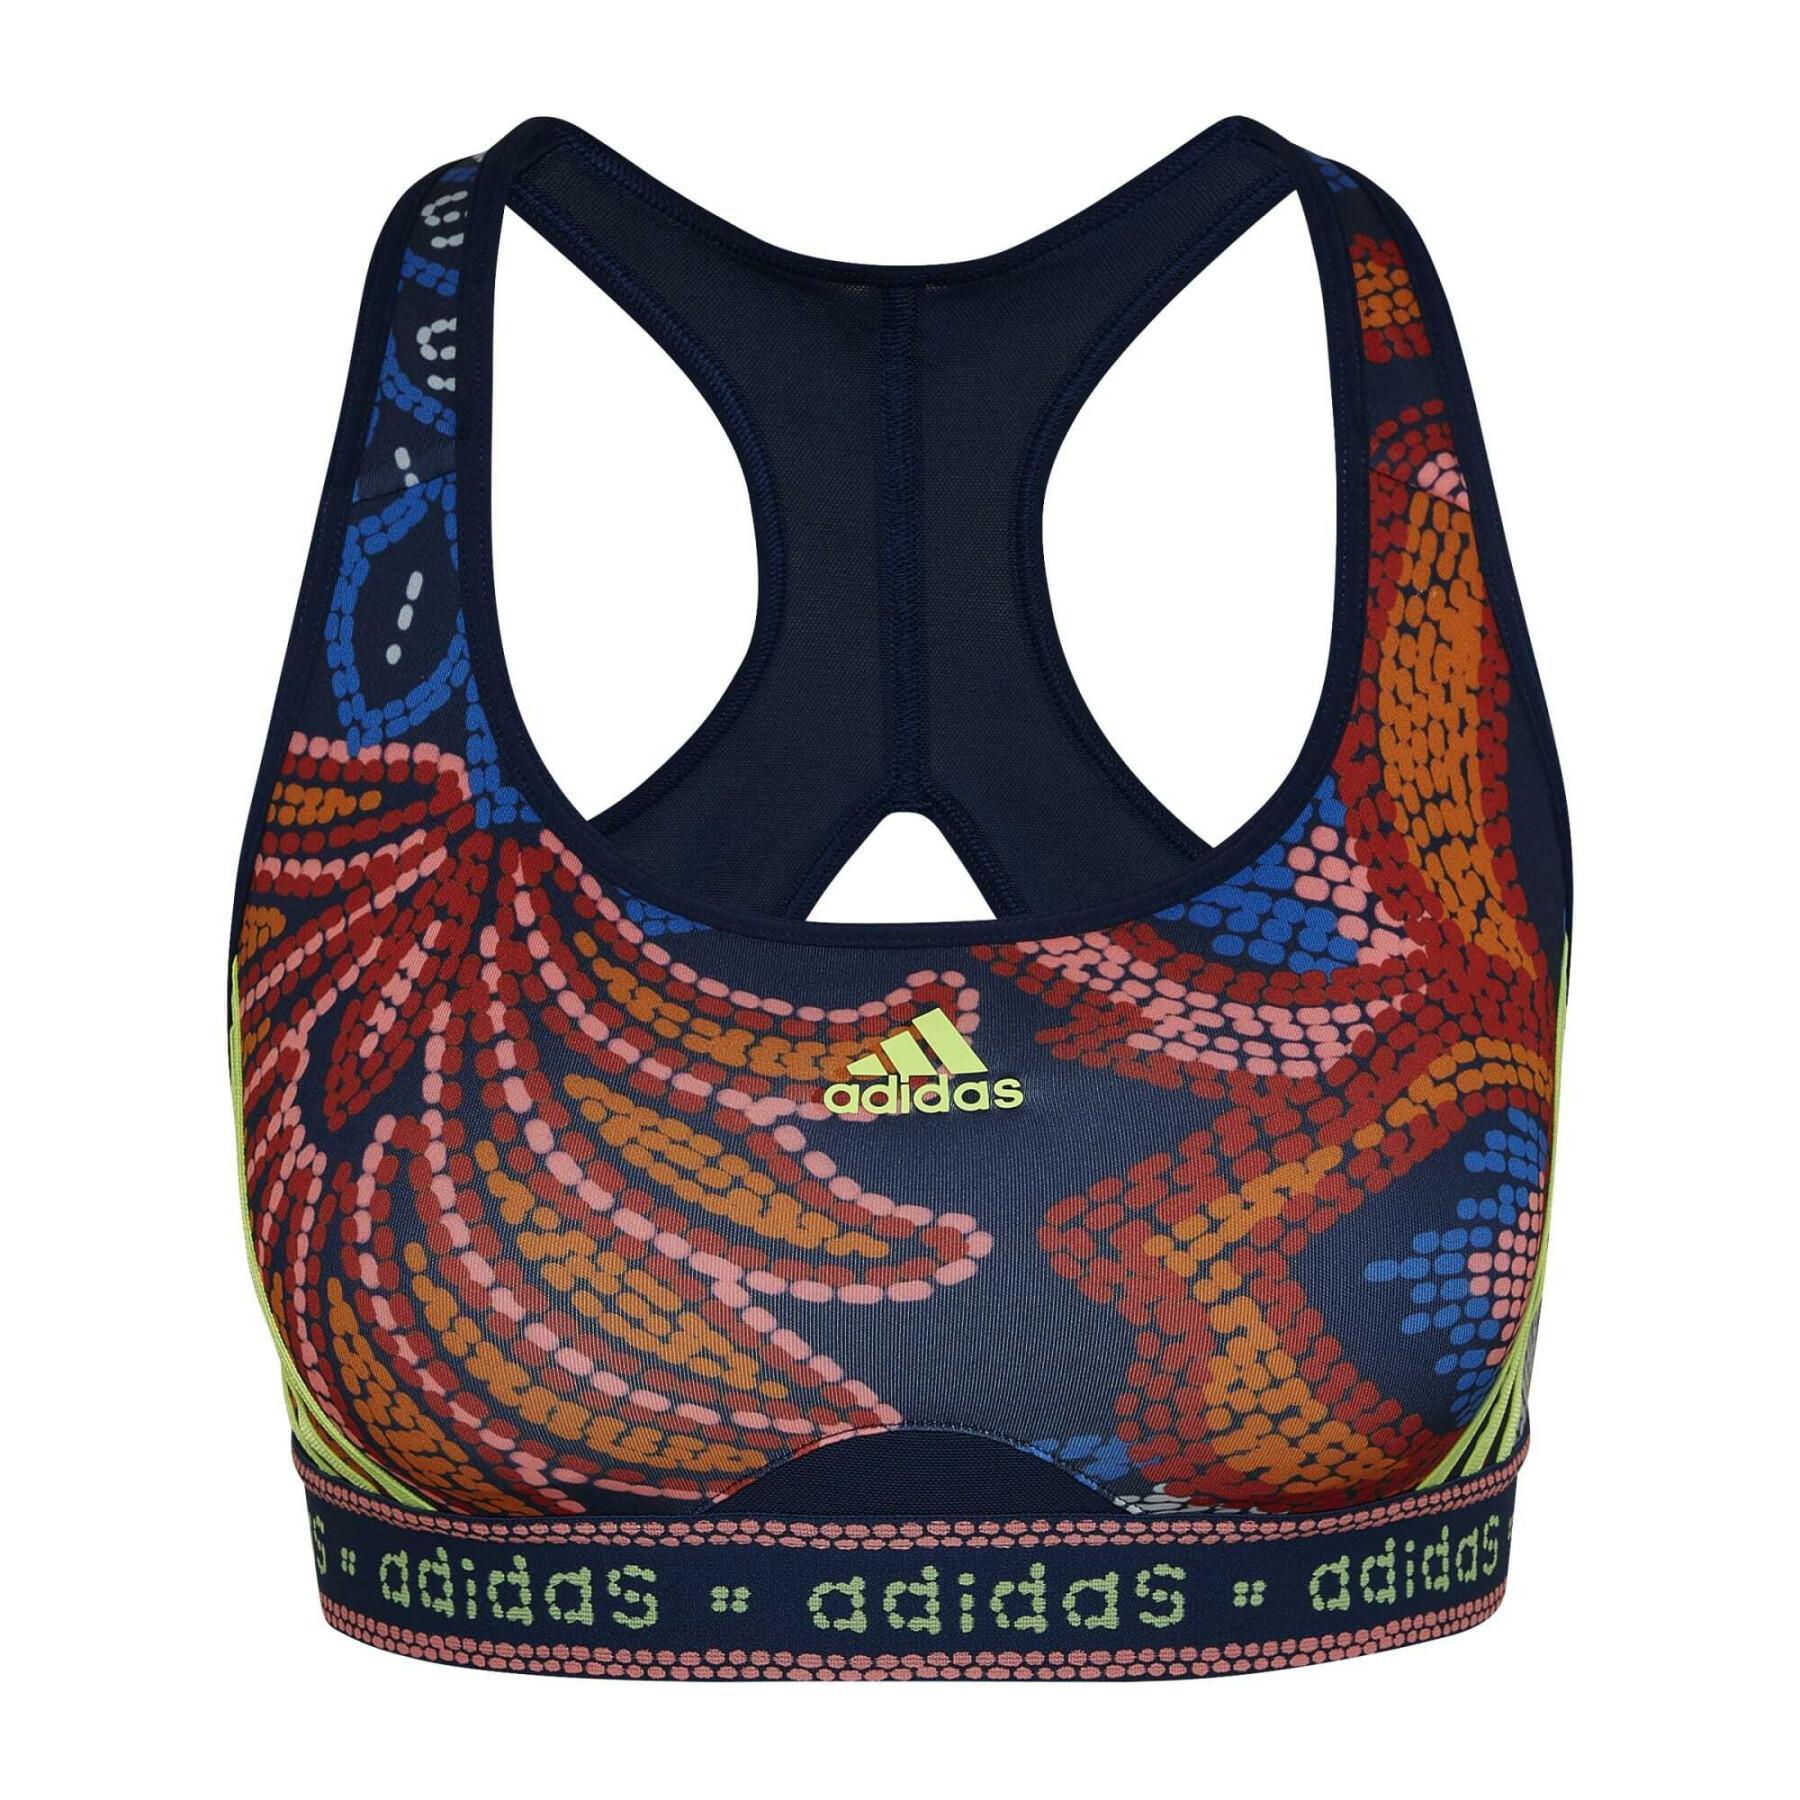 Medium support bra for women adidas FARM Rio - Bras - Women's clothing -  Fitness